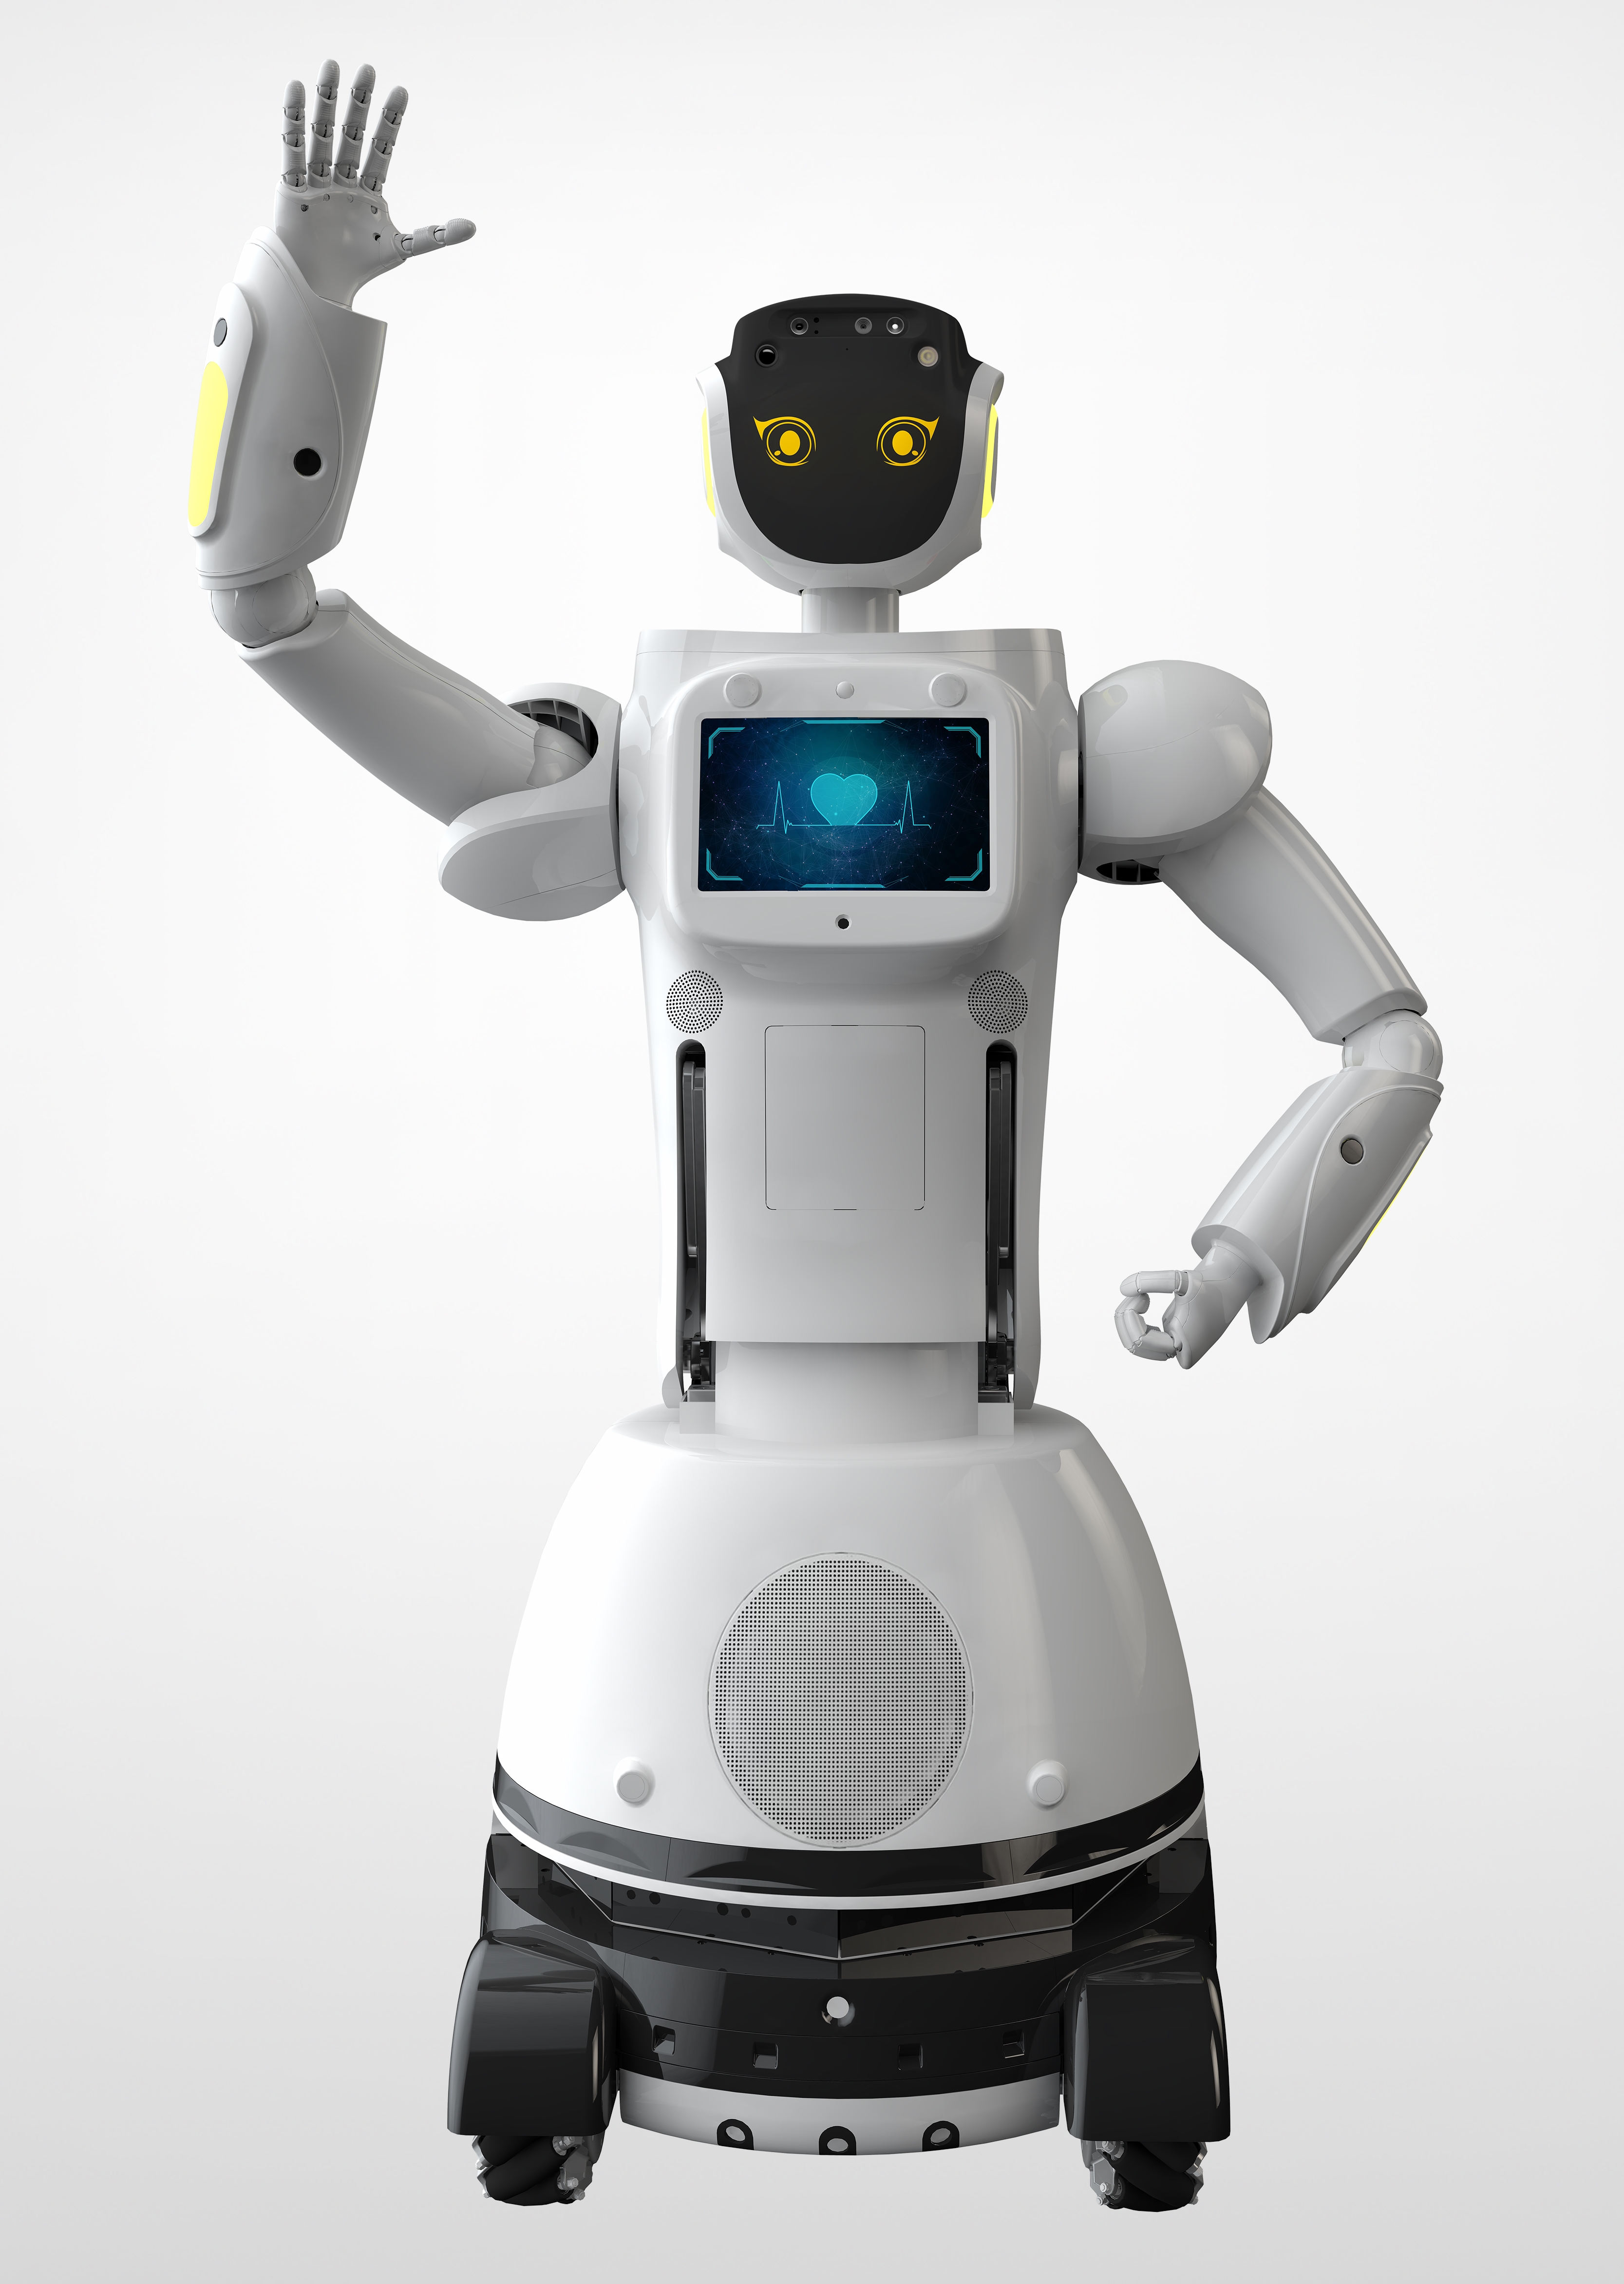 Sanbot Hotel Robot Butler